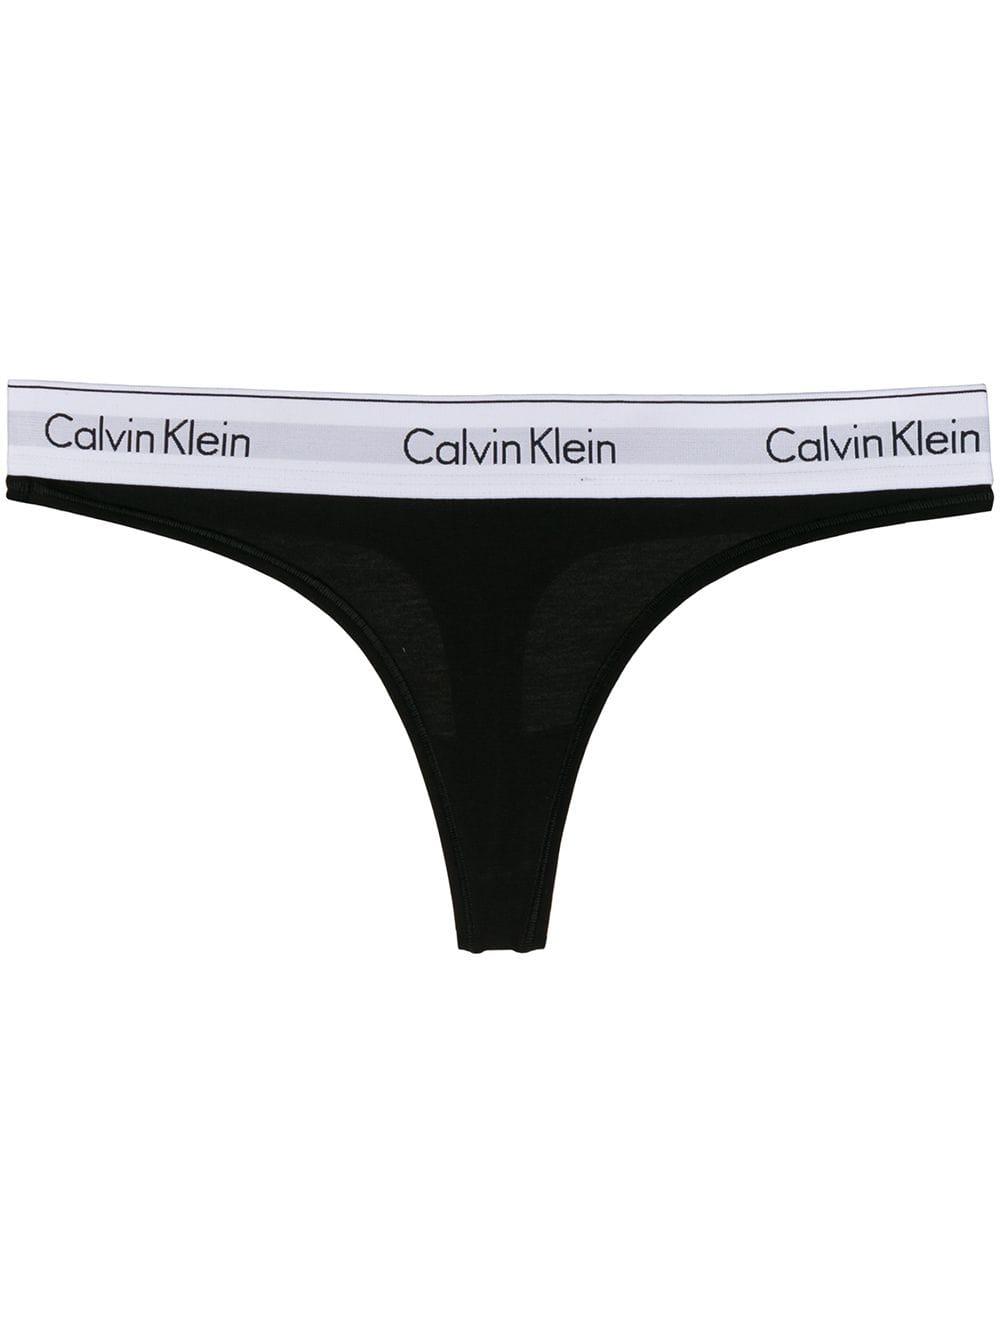 Lot De String Calvin Klein Flash Sales, 56% OFF | www.ingeniovirtual.com